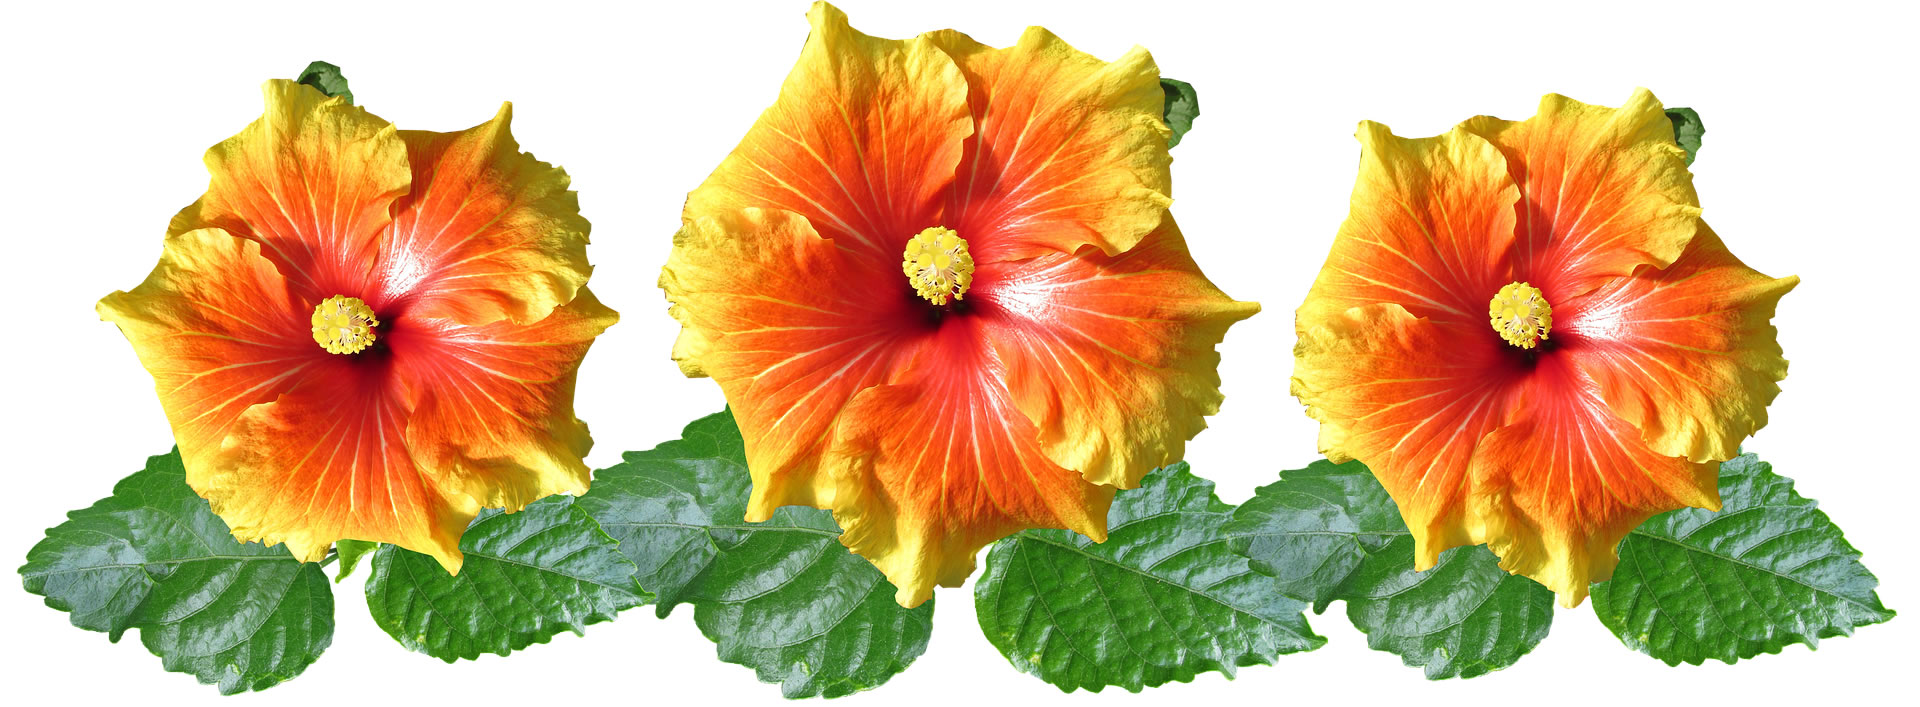 hibiscus-3370253-1920.jpg